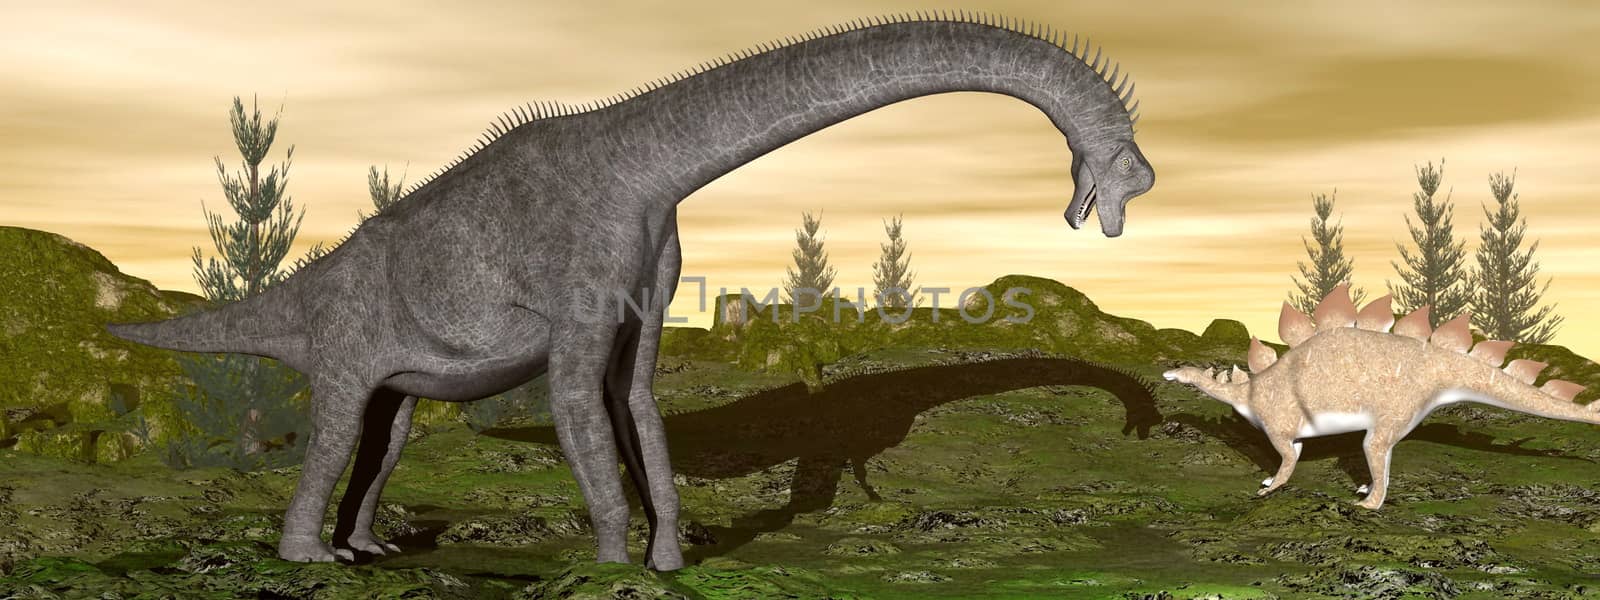 Brachiosaurus and stegosaurus dinosaurs- 3D render by Elenaphotos21